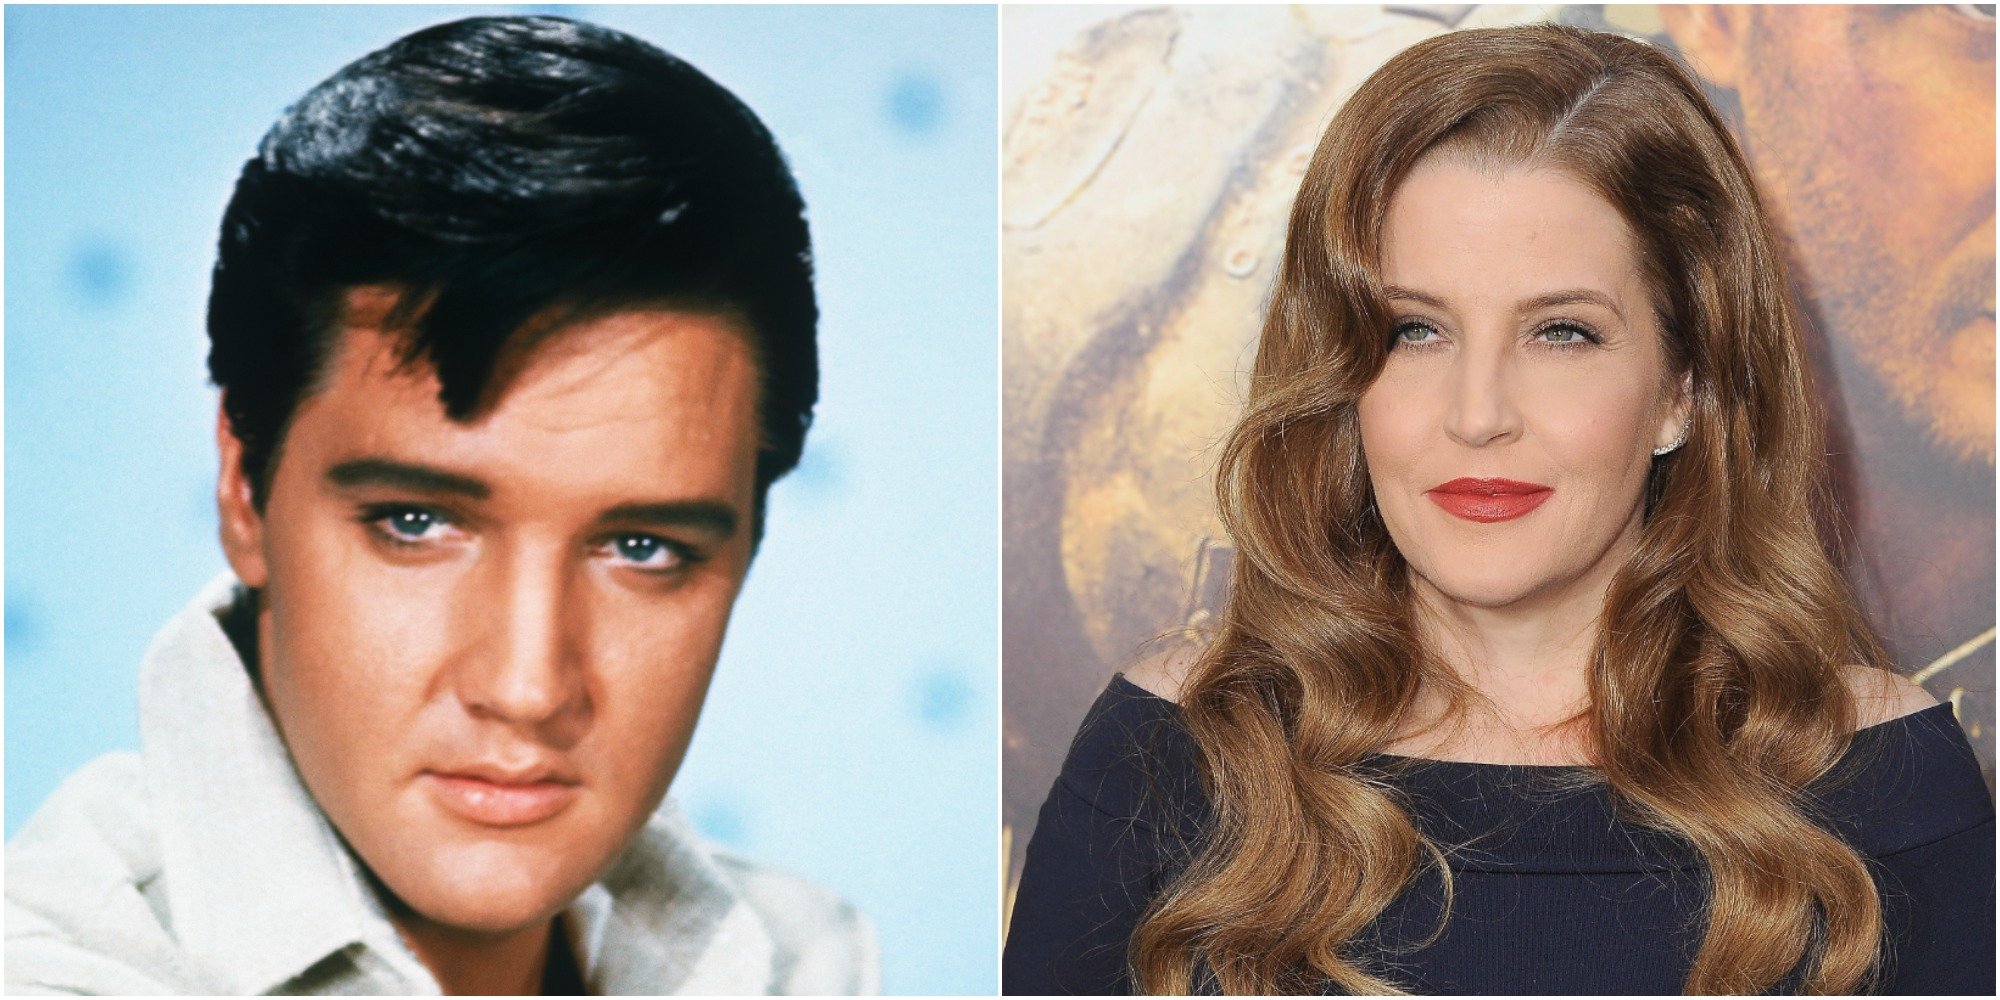 Elvis Presley and Lisa Marie Presley pose in side-by-side photographs.